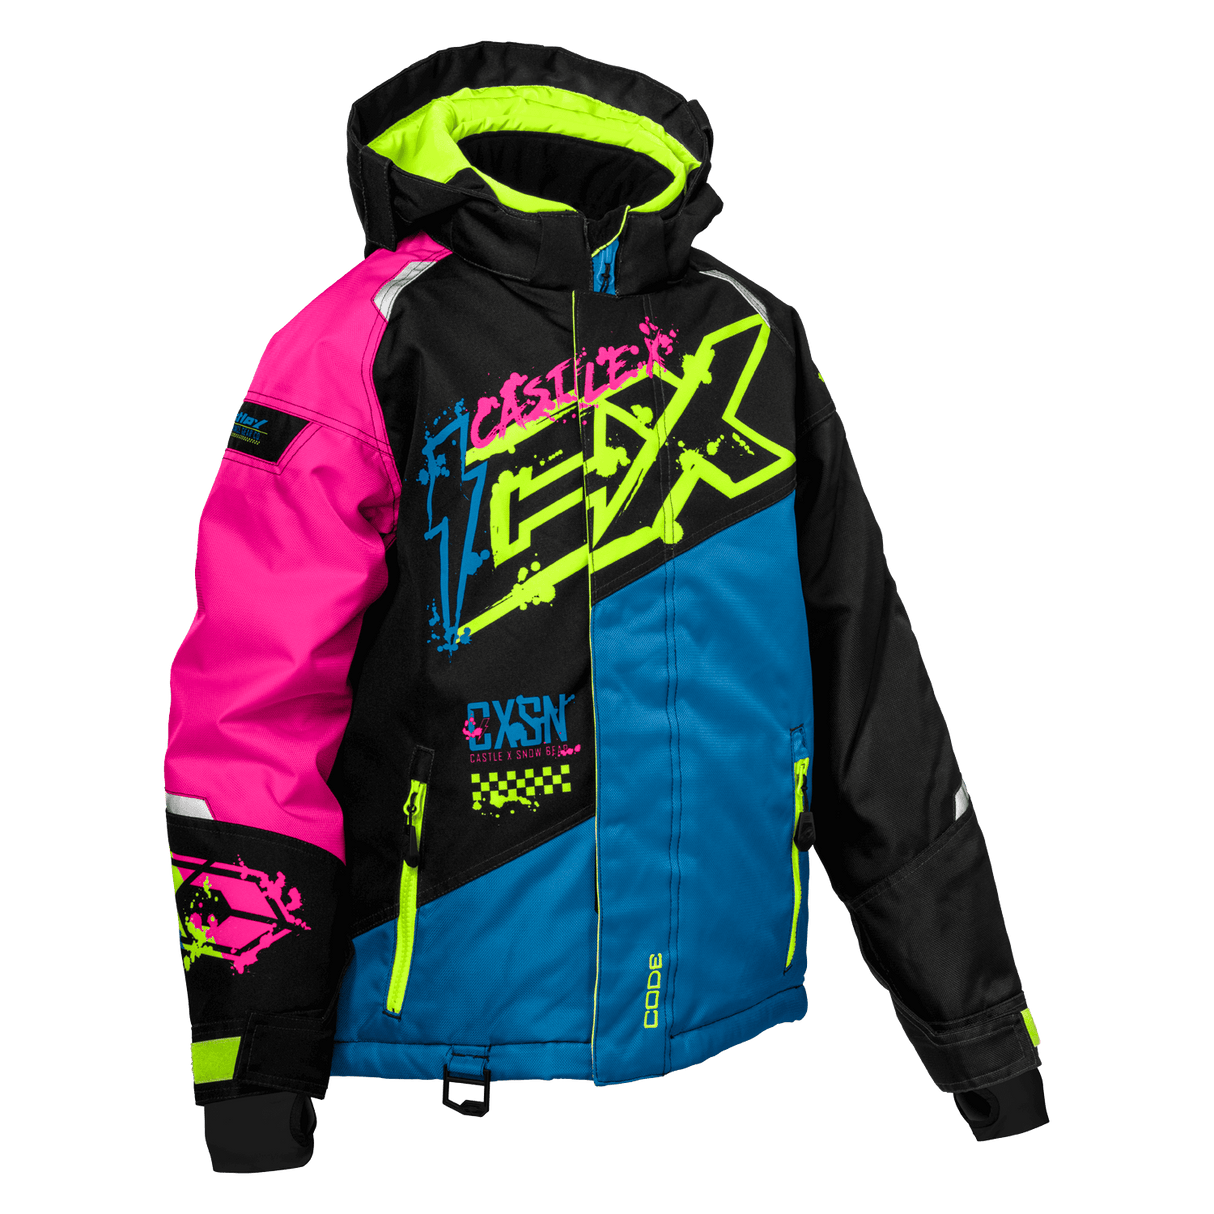 Castle X Code-G5 Youth Jacket